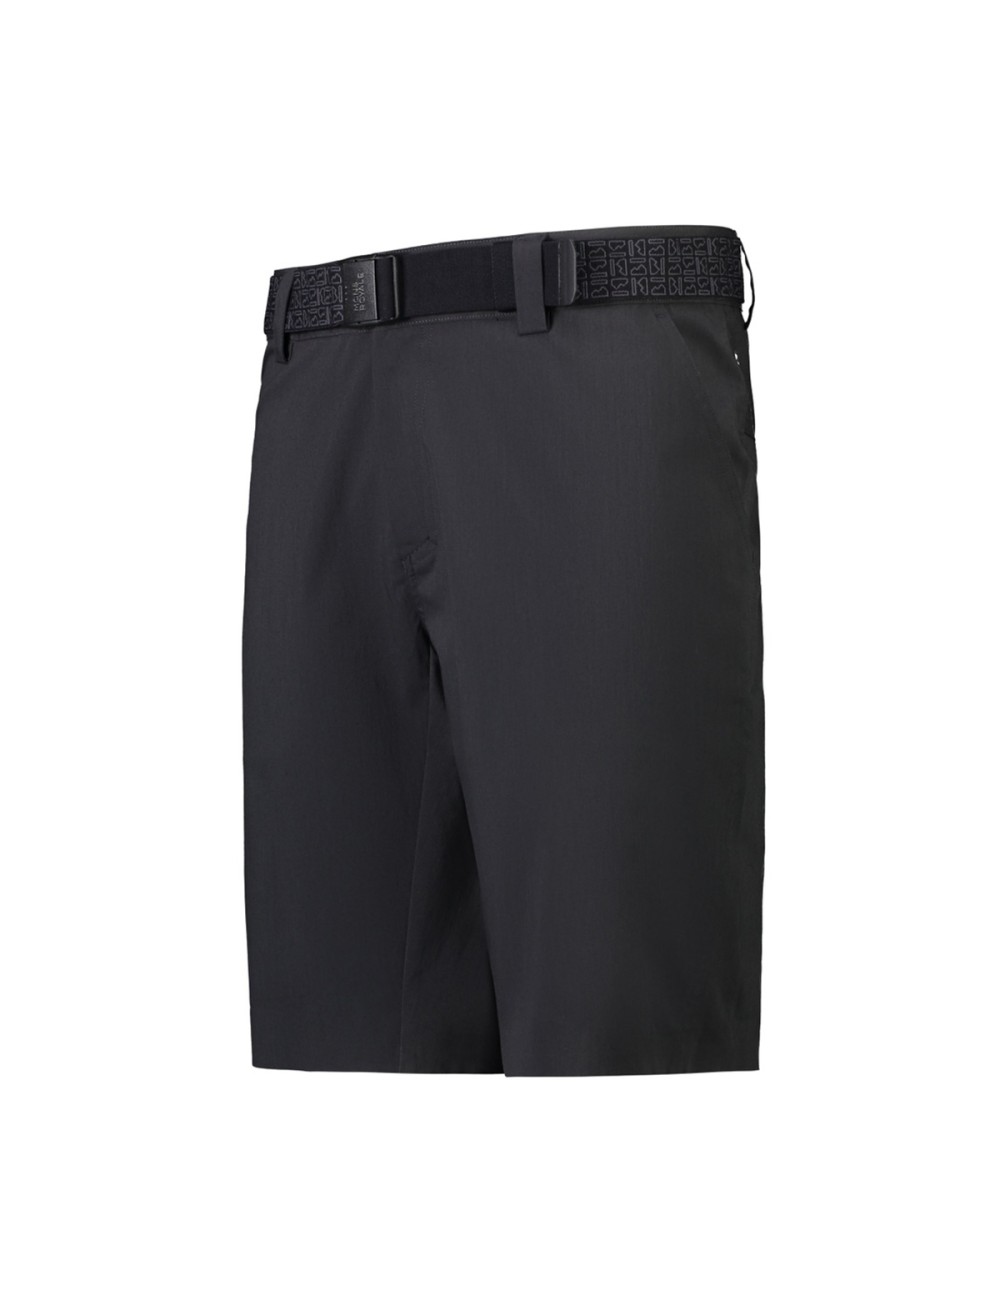 Mons Royale Drift Shorts - Black_14893